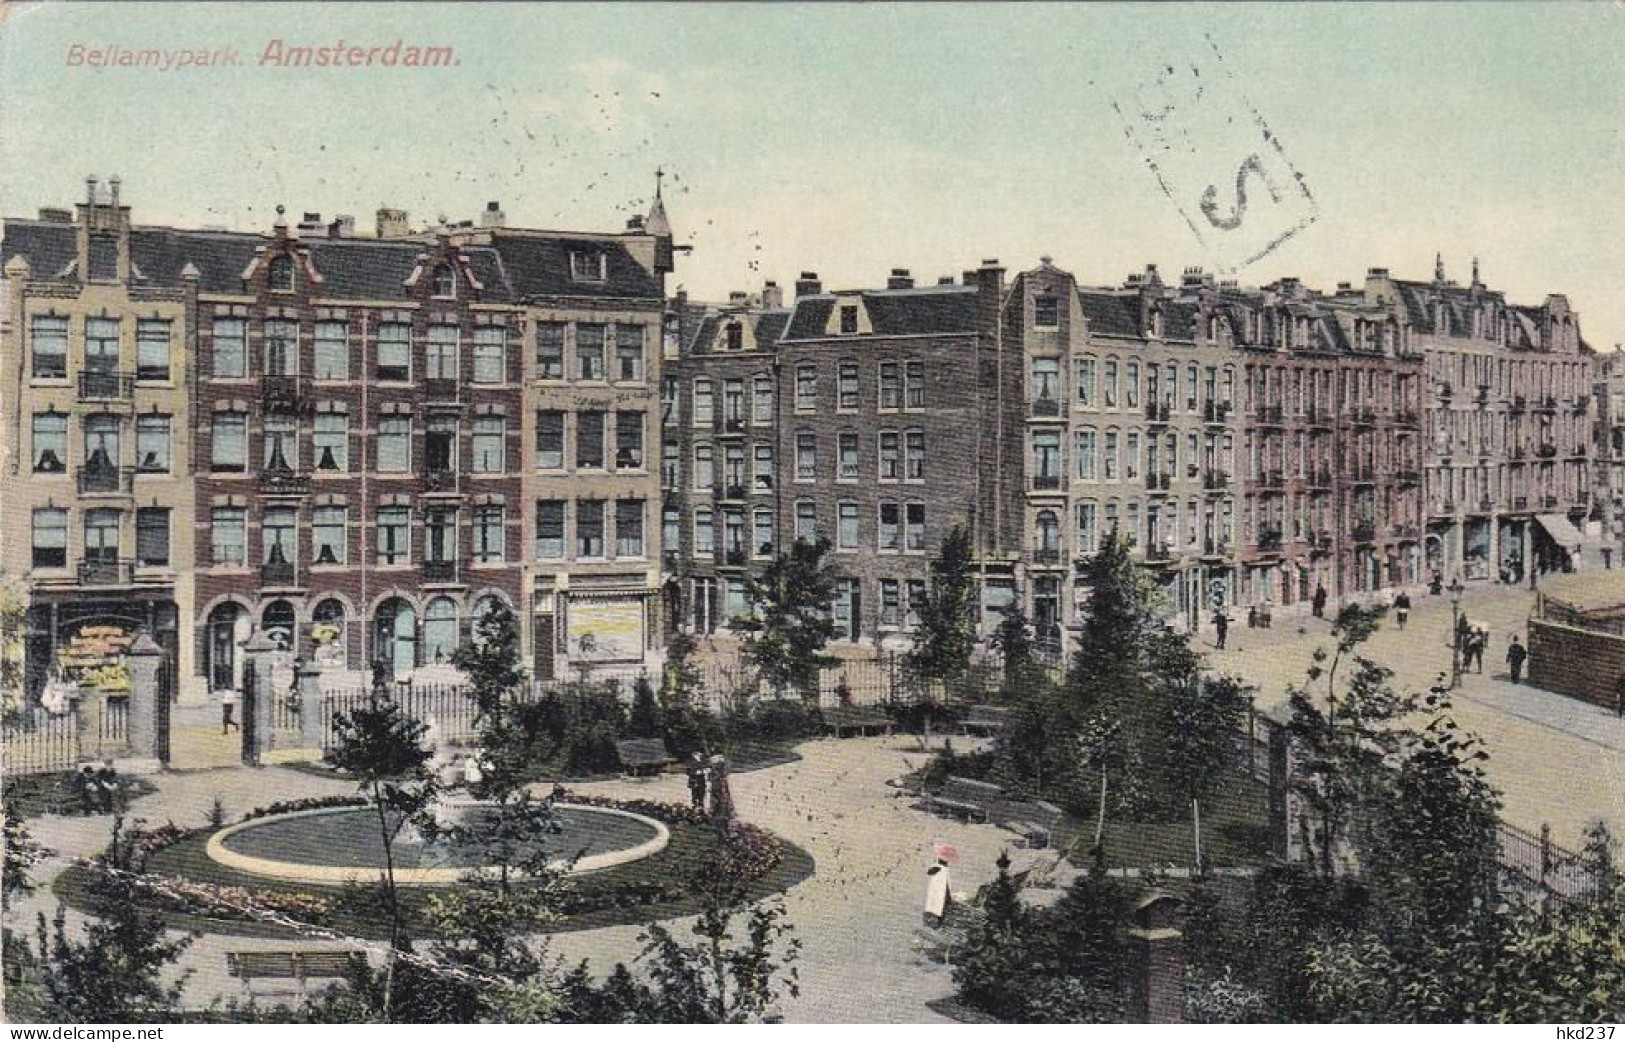 Amsterdam Bellamyplein Levendig # 1909   1760 - Amsterdam